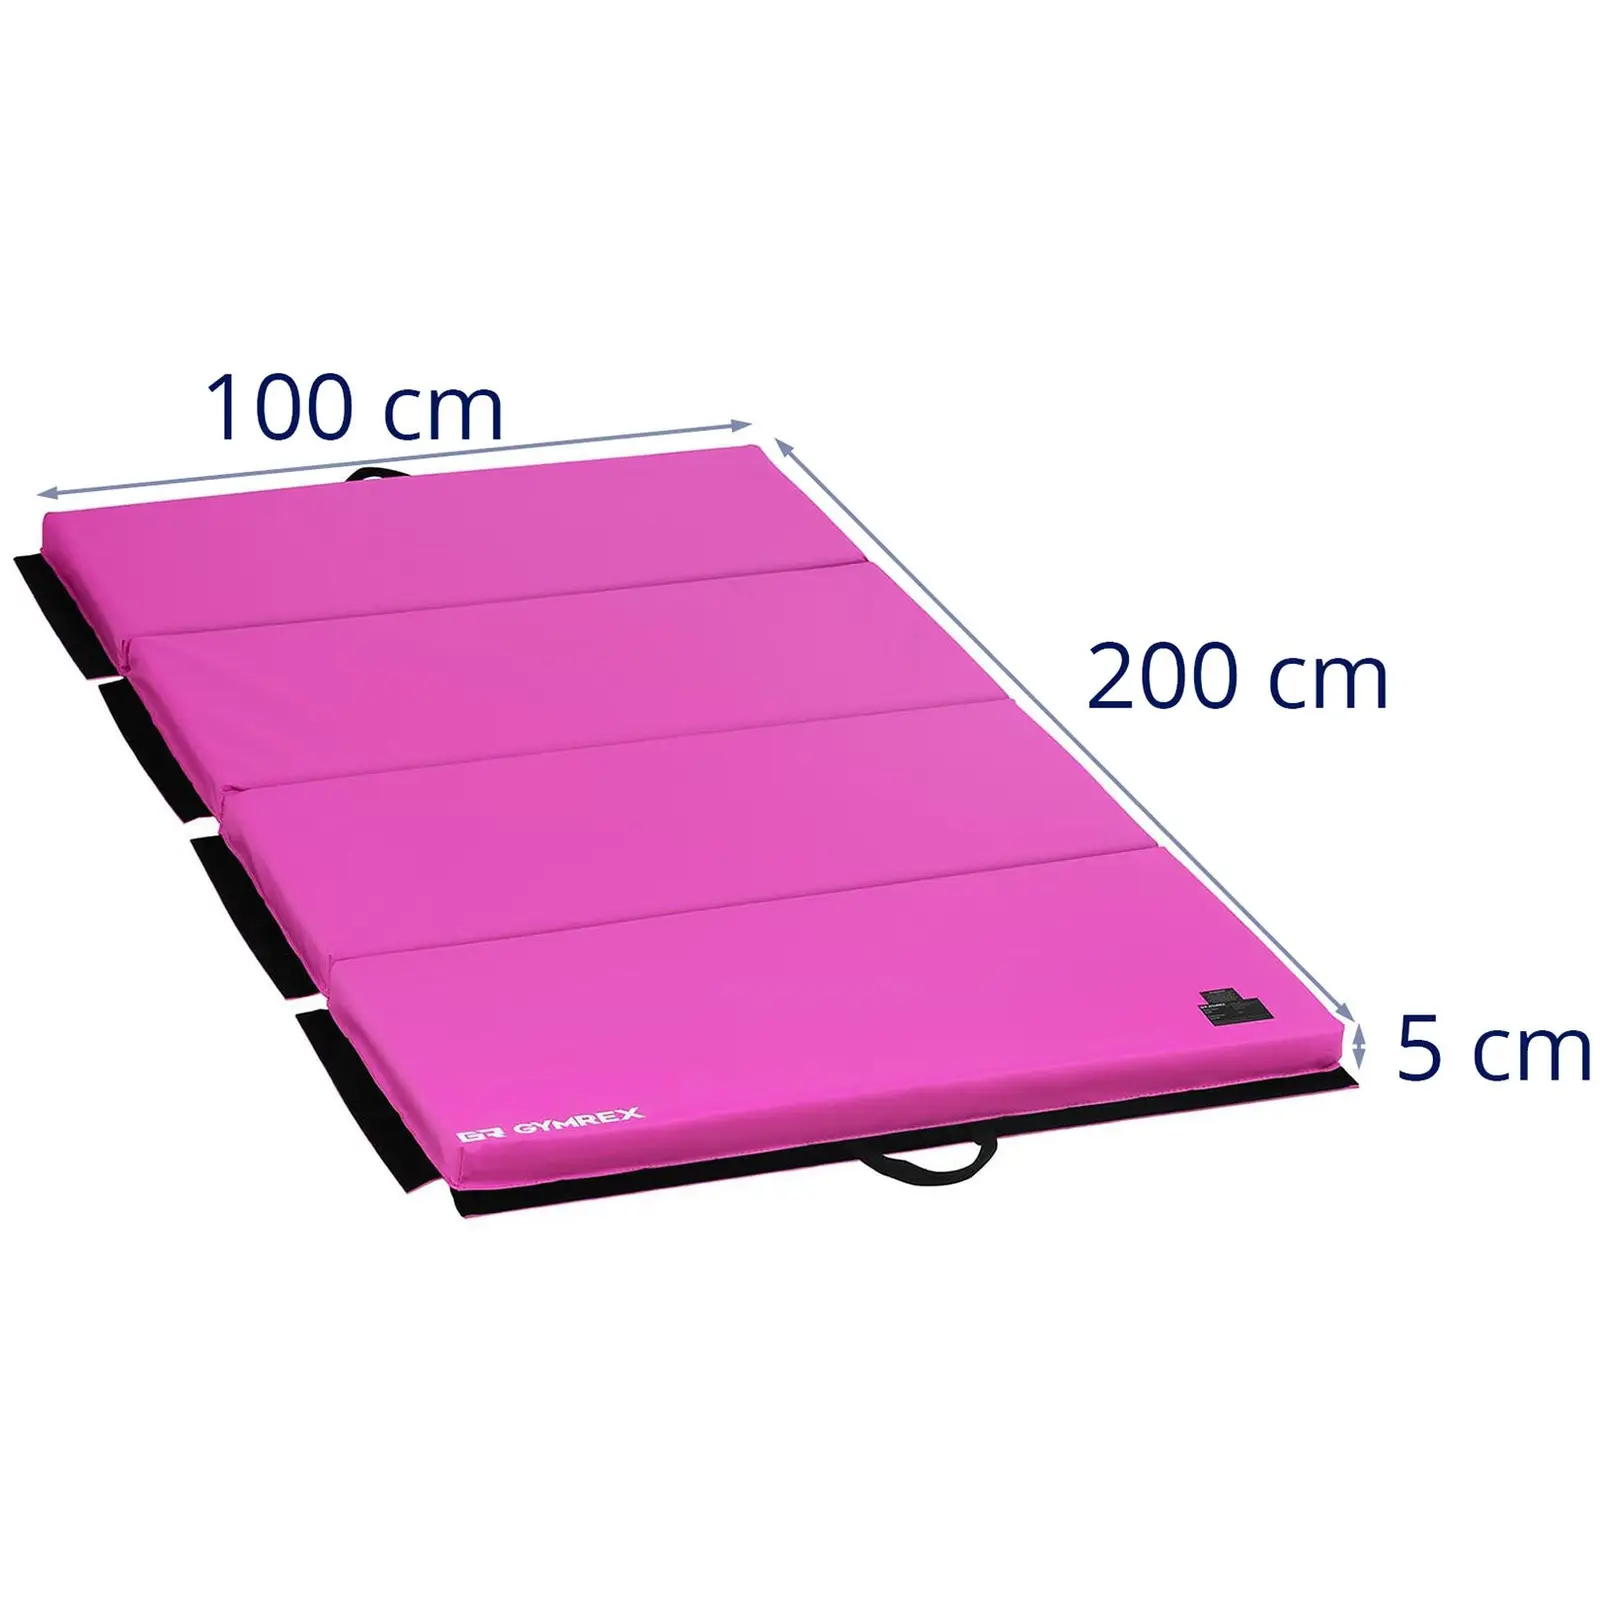 Colchoneta de gimnasia - 200 x 100 x 5 cm - plegable - rosa salmón/negro -  hasta 170kg